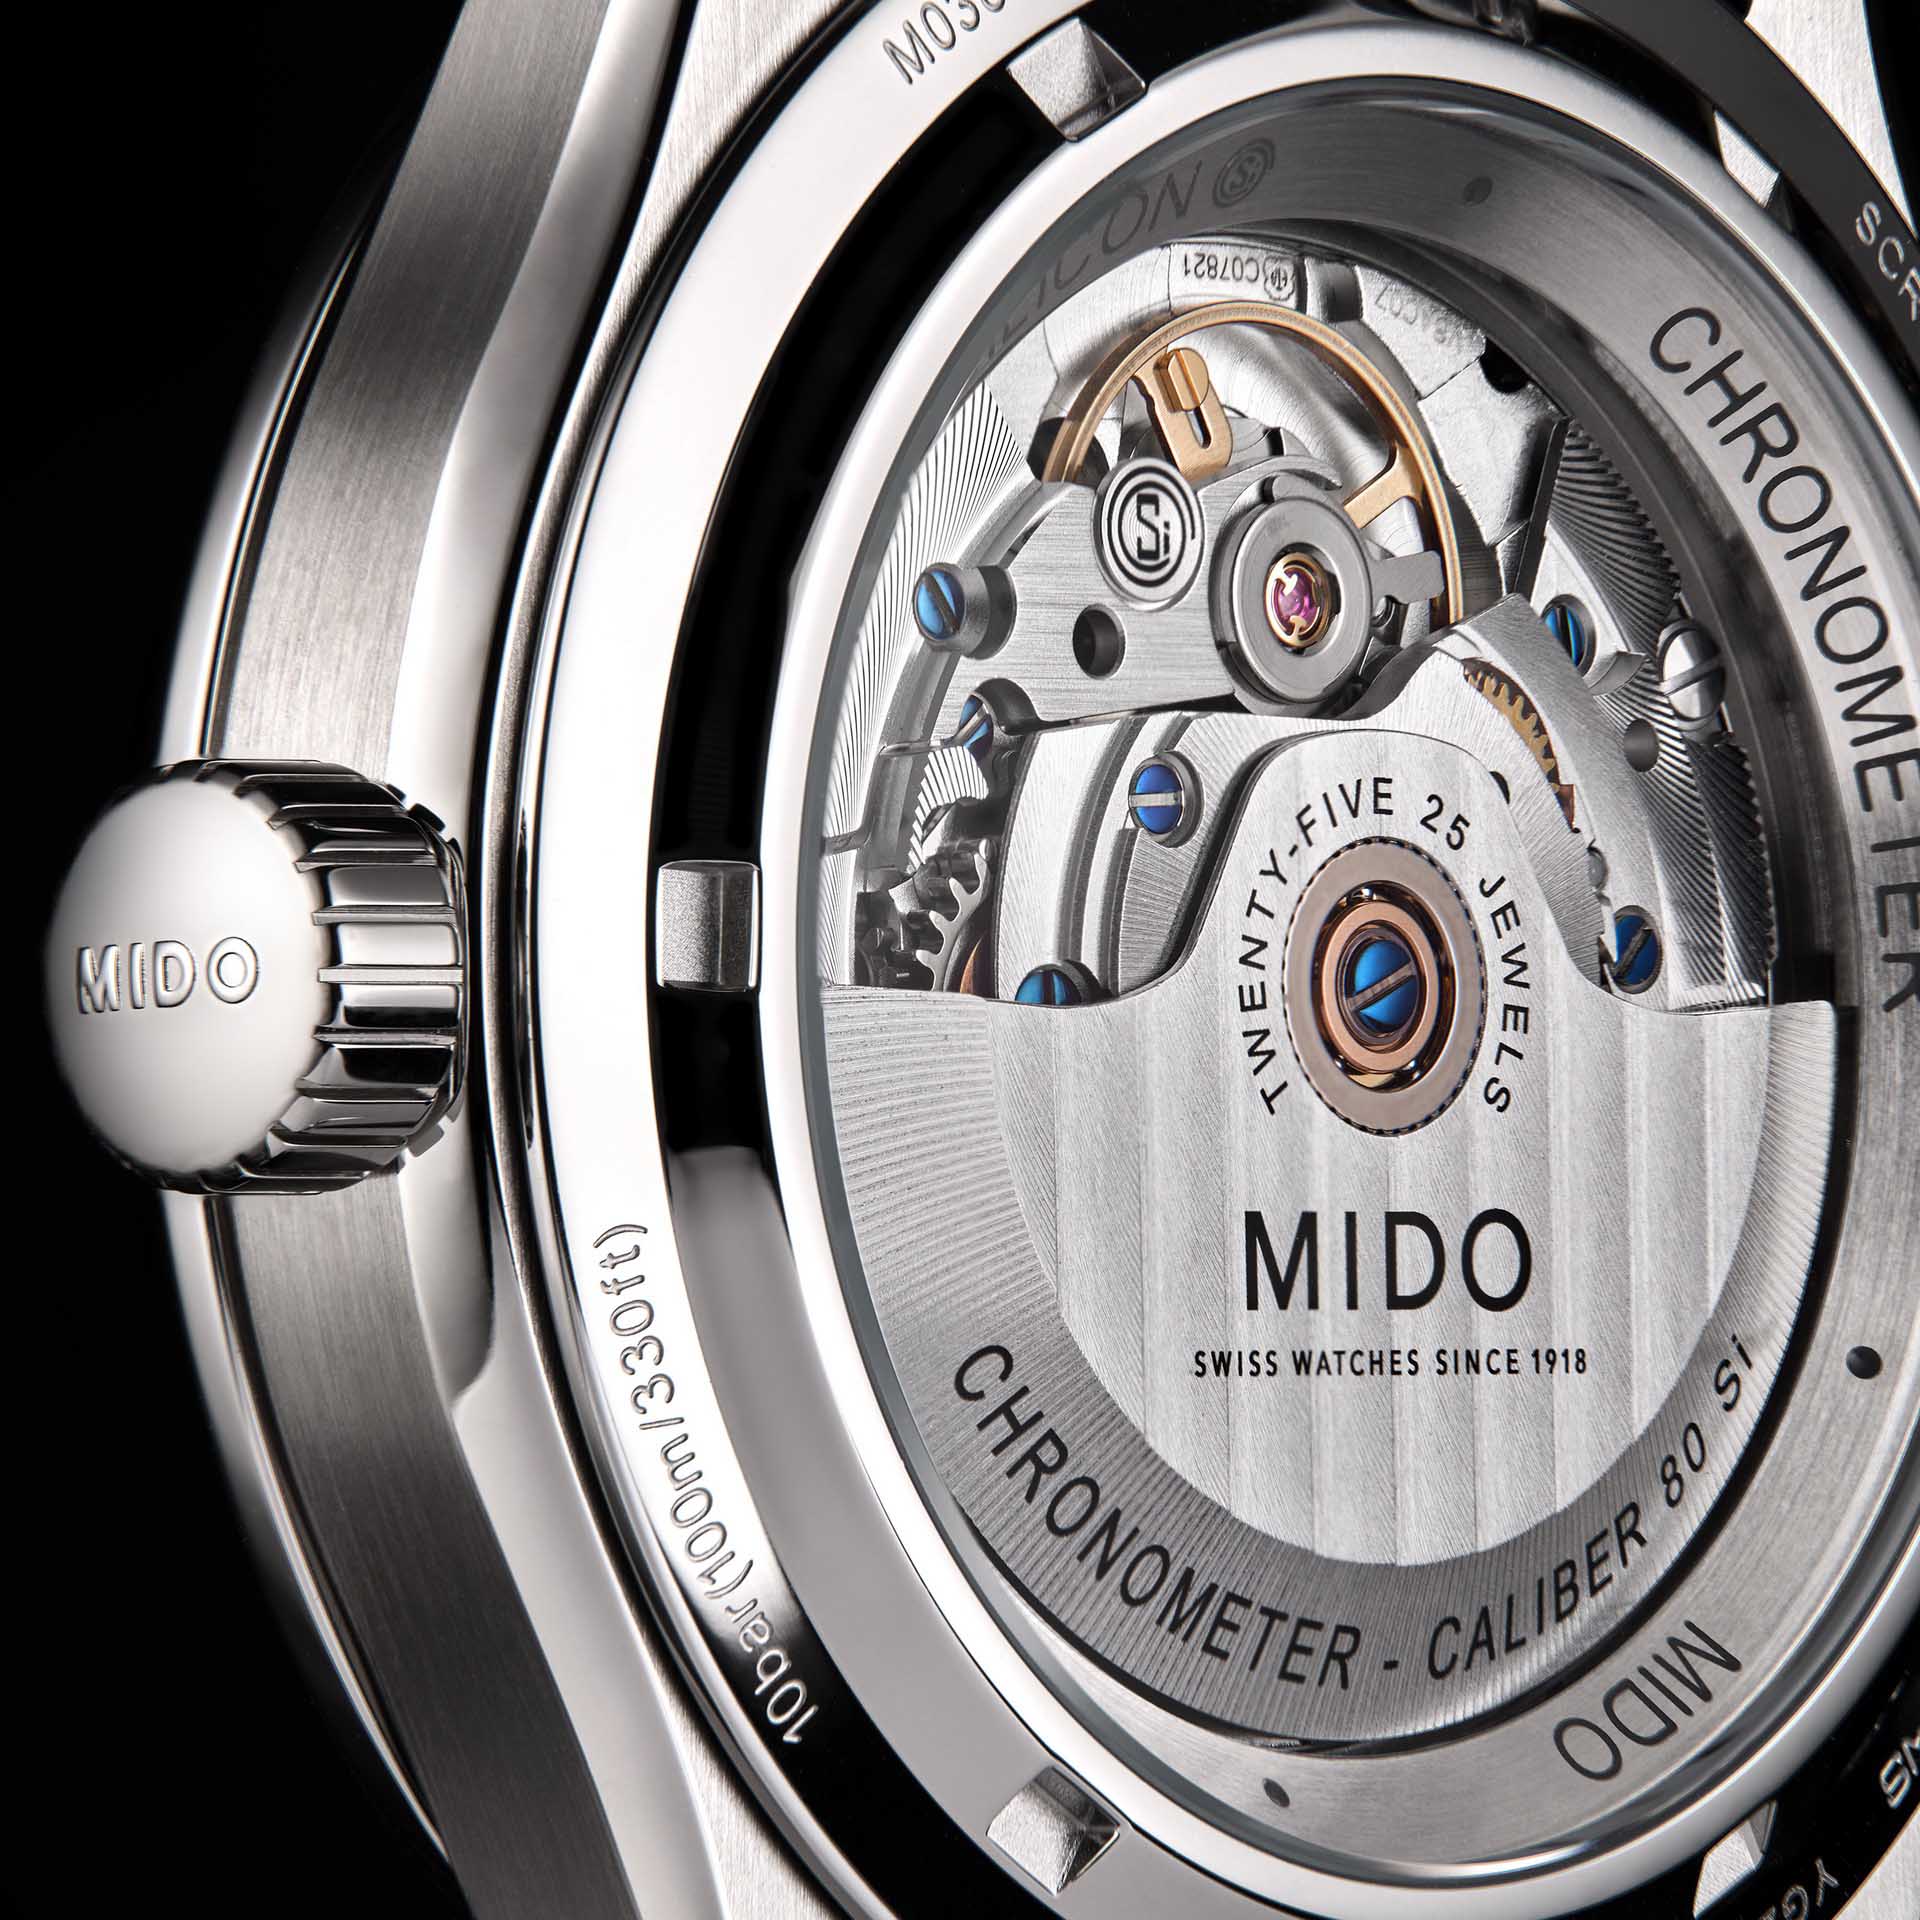 Mido Multifort M Chronometer